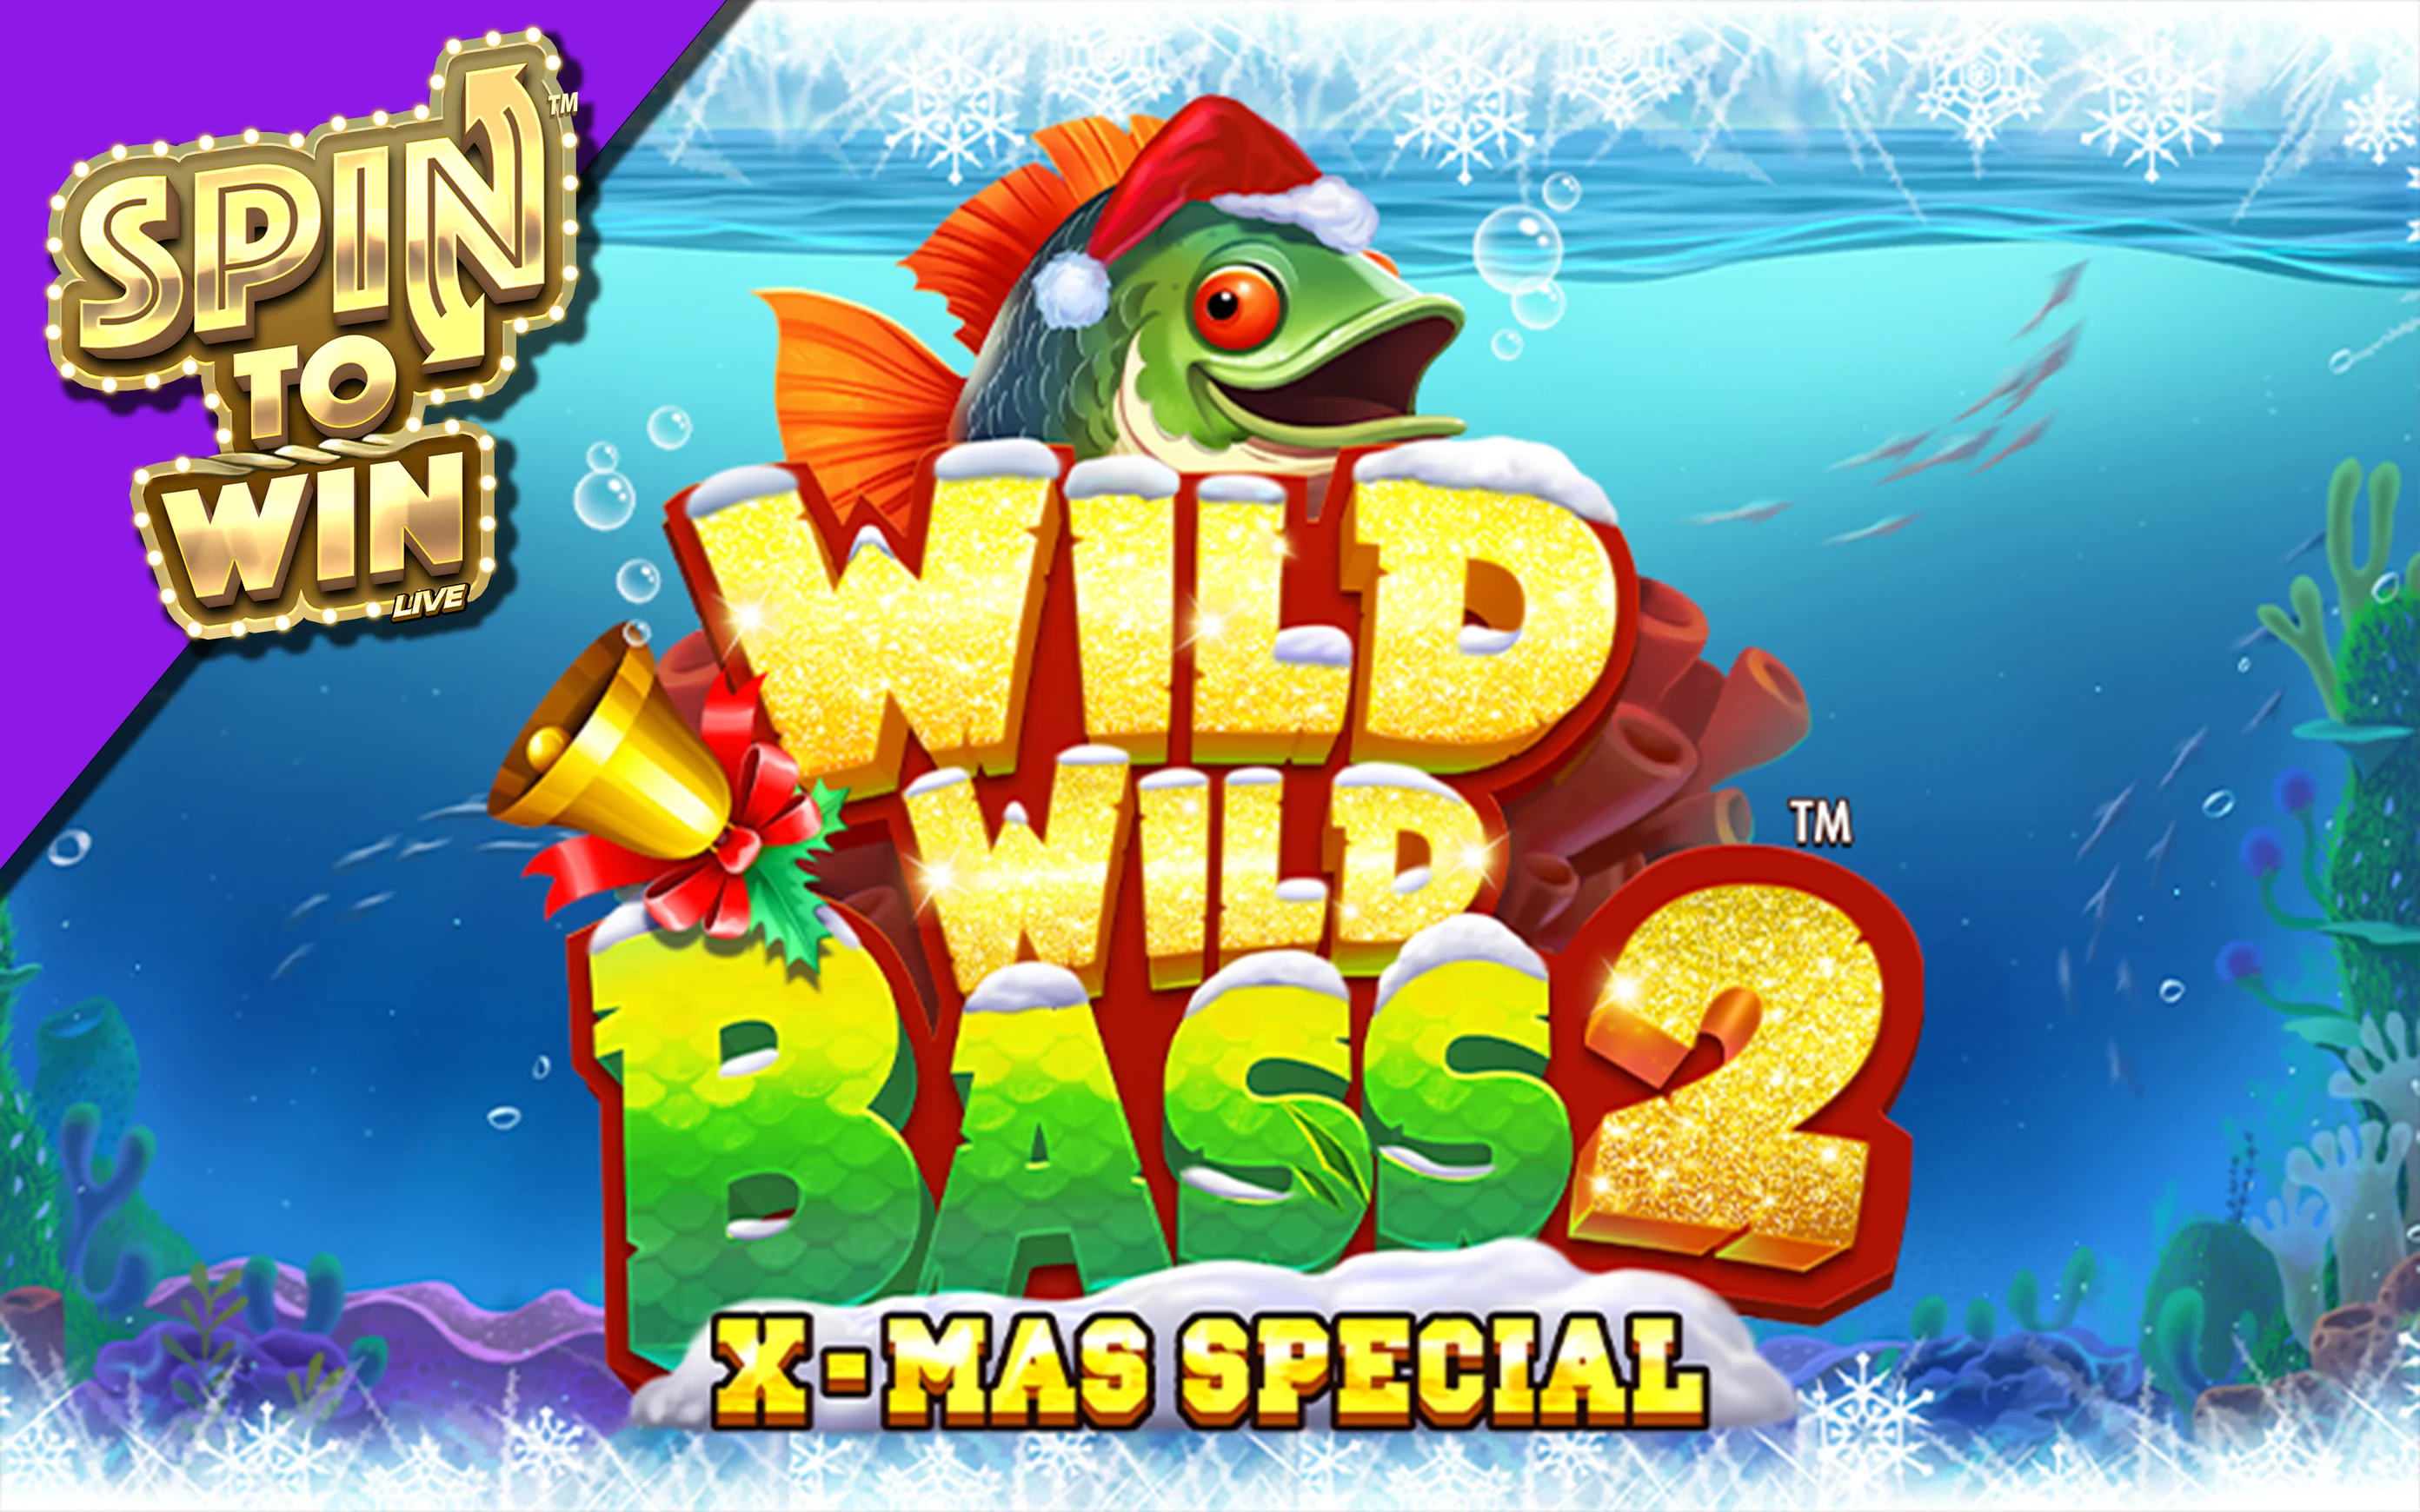 Gioca a Wild Wild Bass 2 Xmas Special™ sul casino online Starcasino.be